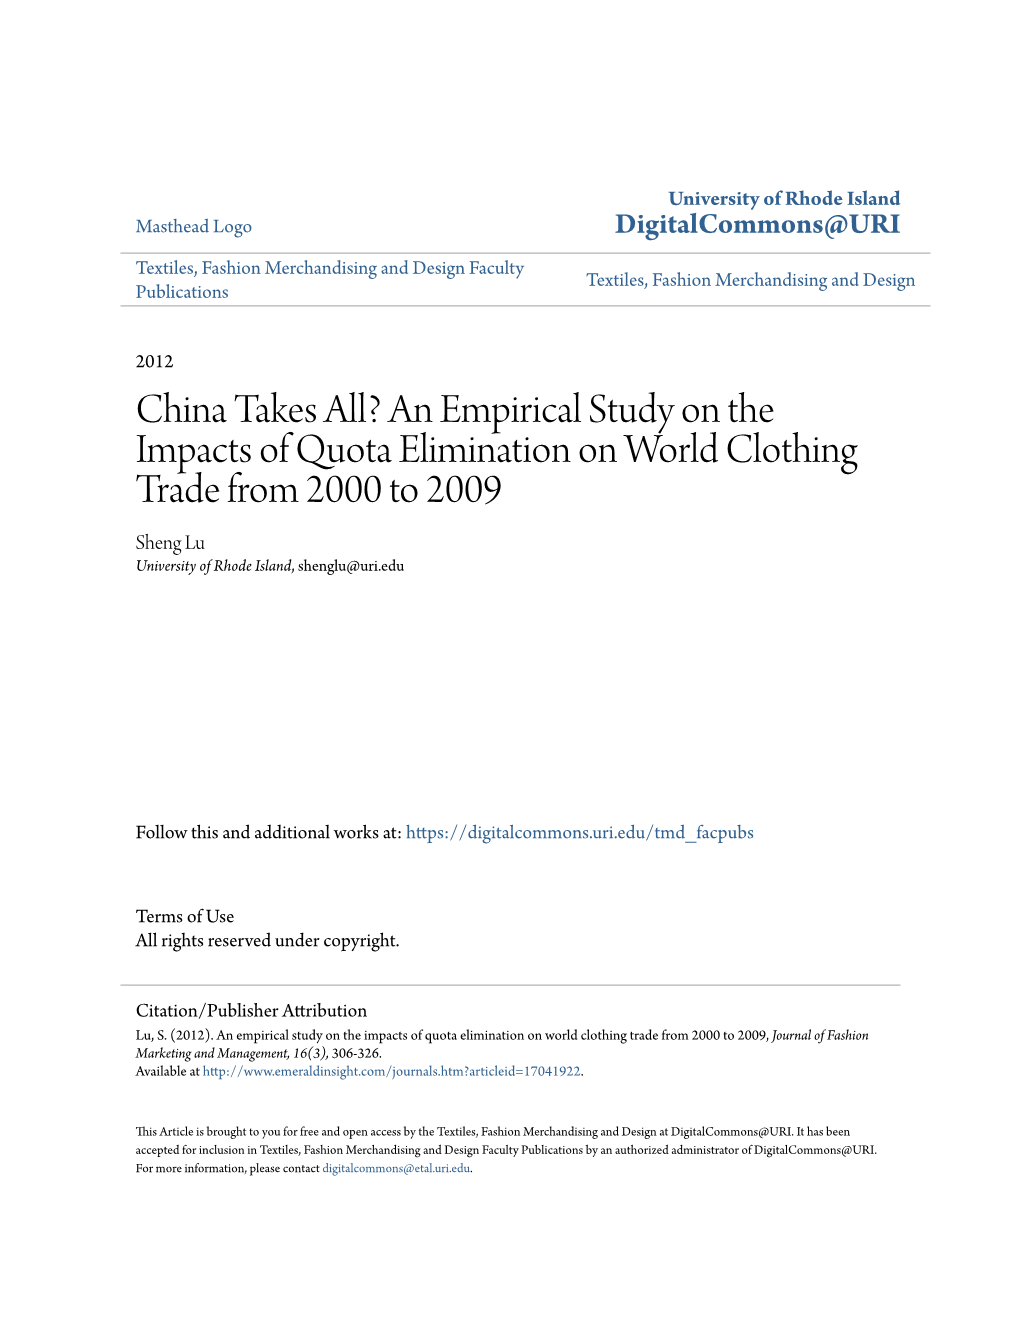 An Empirical Study on the Impacts of Quota Elimination on World Clothing Trade from 2000 to 2009 Sheng Lu University of Rhode Island, Shenglu@Uri.Edu